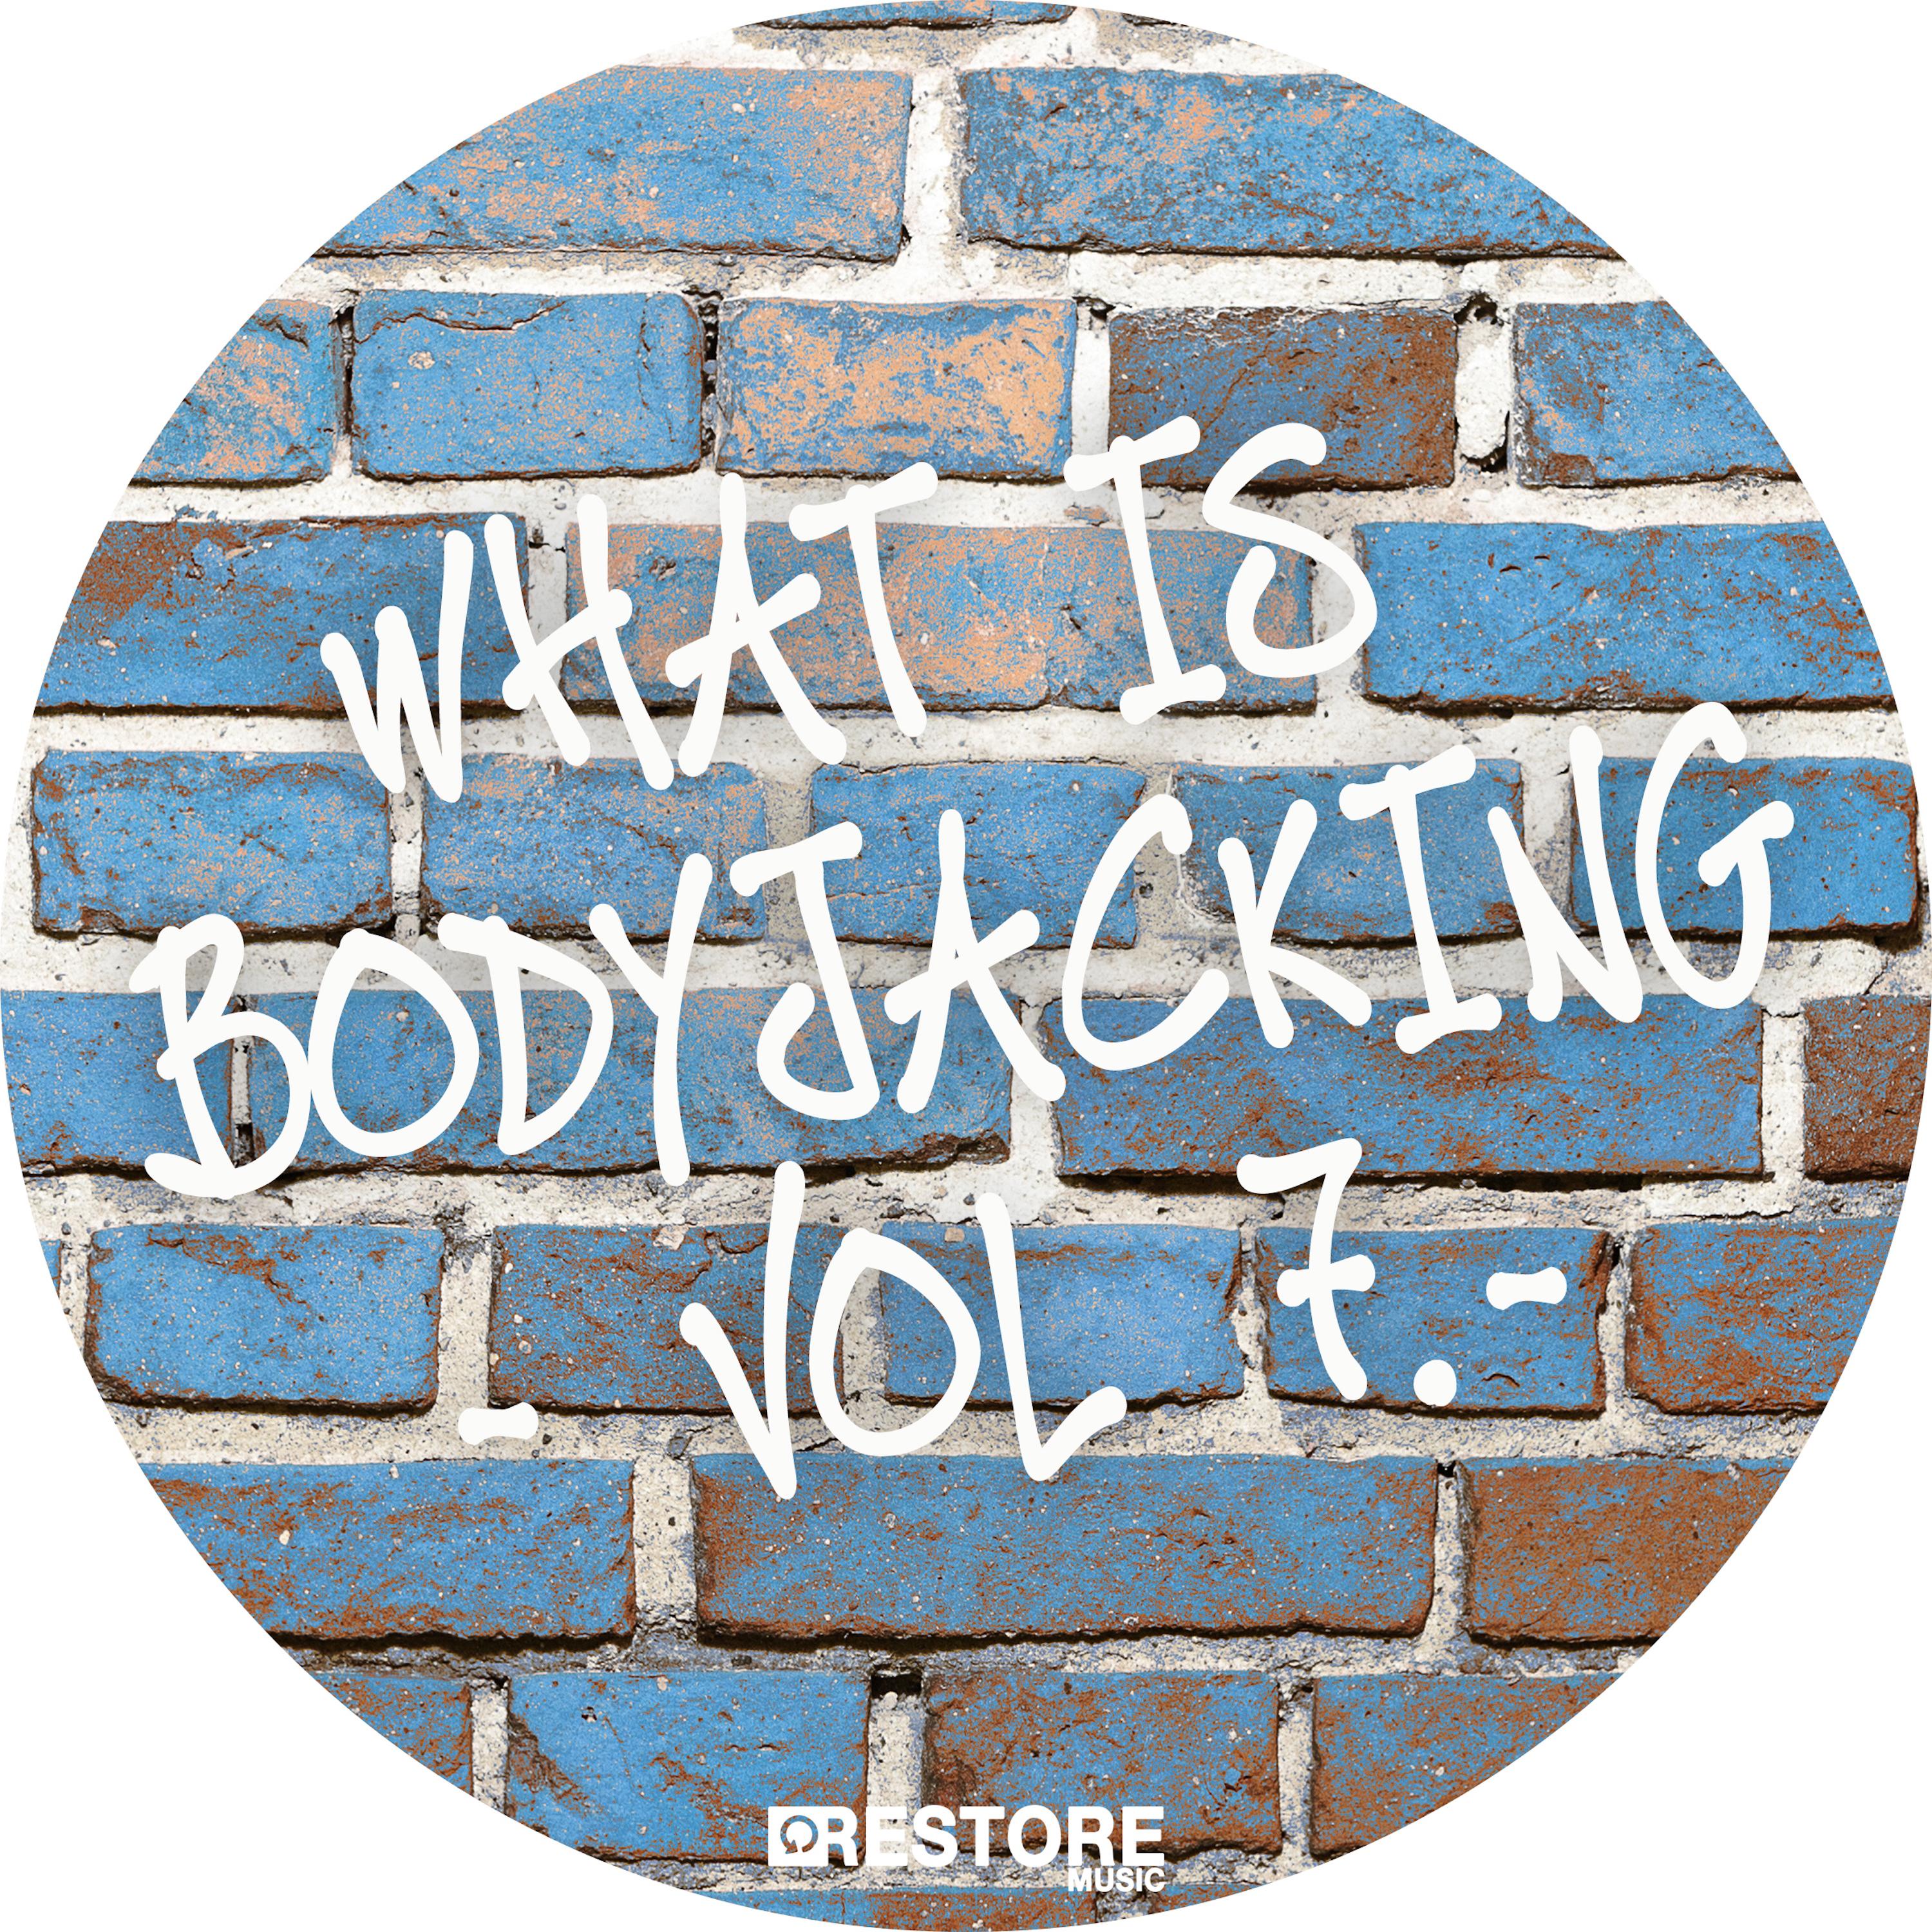 What is Bodyjacking?, Vol. 7